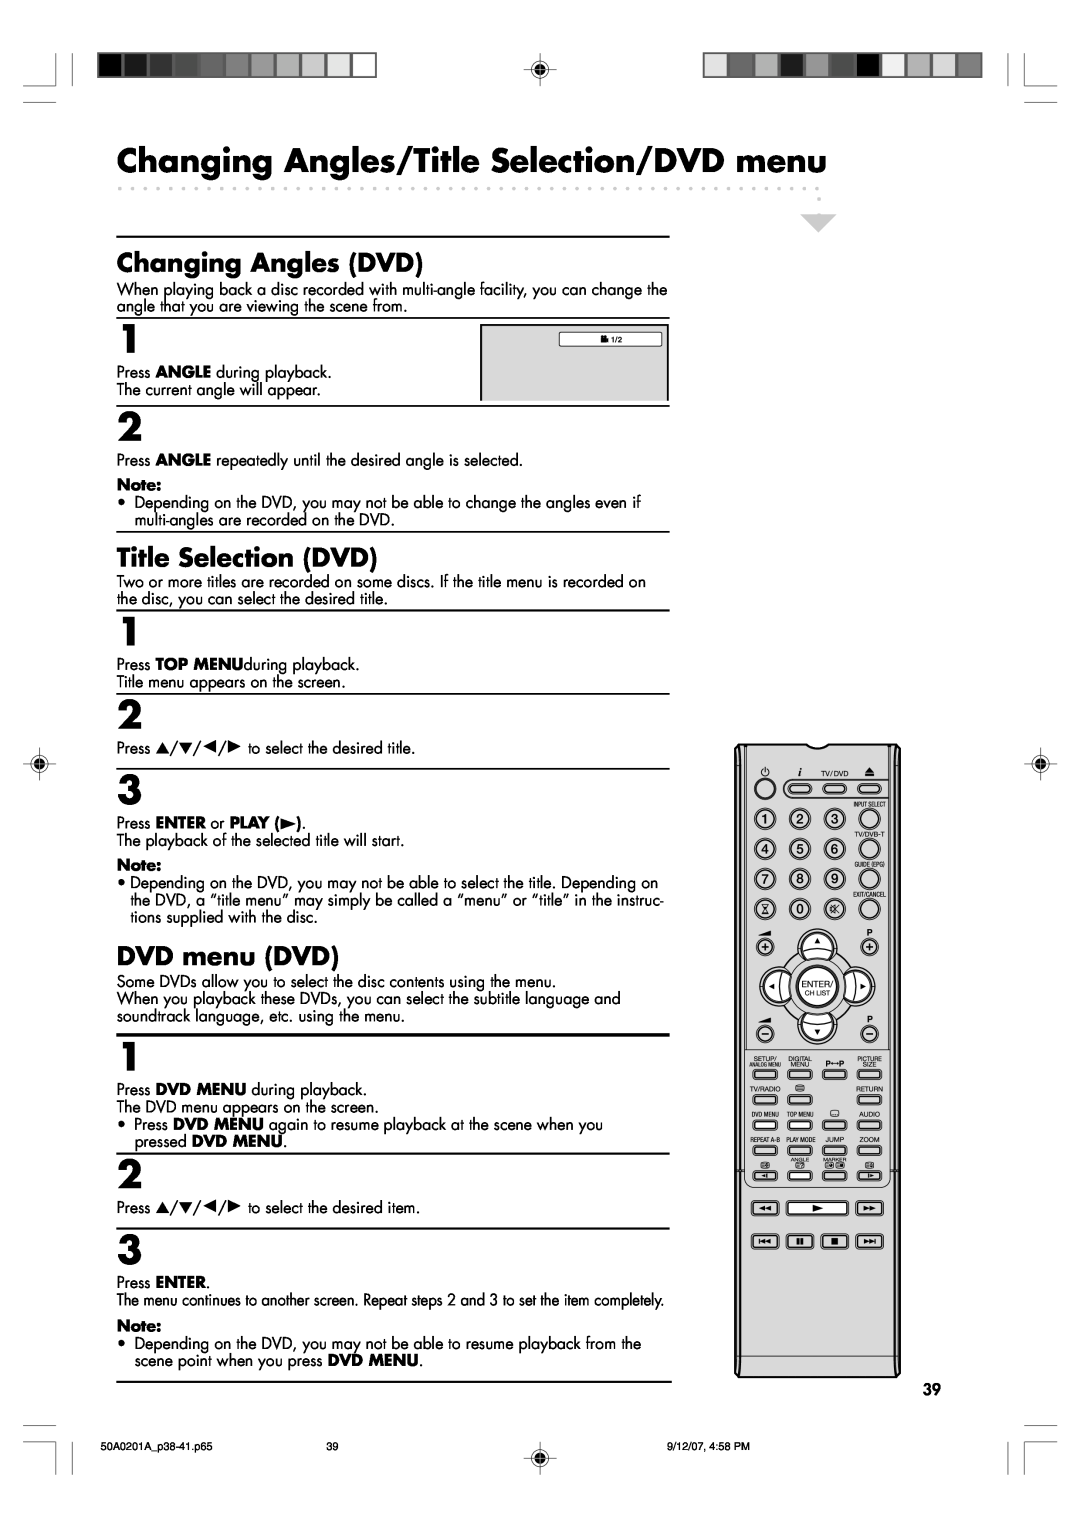 Sansui TV19PL120DVD Changing Angles/Title Selection/DVD menu, Changing Angles DVD, Title Selection DVD, DVD menu DVD 